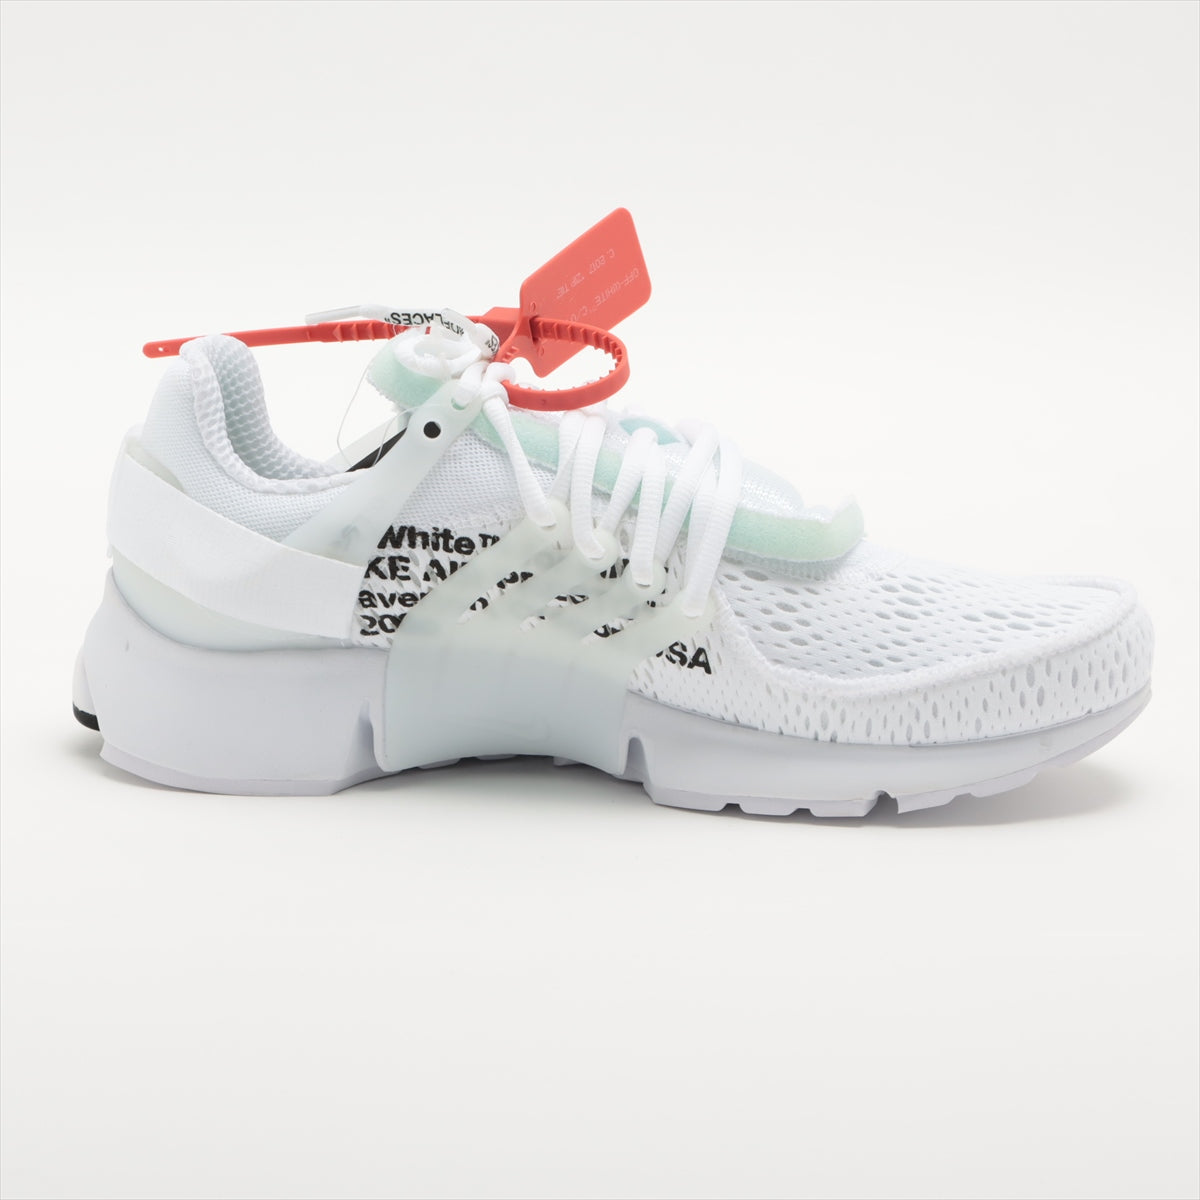 28cm OFF-WHITE x Nike Air Presto